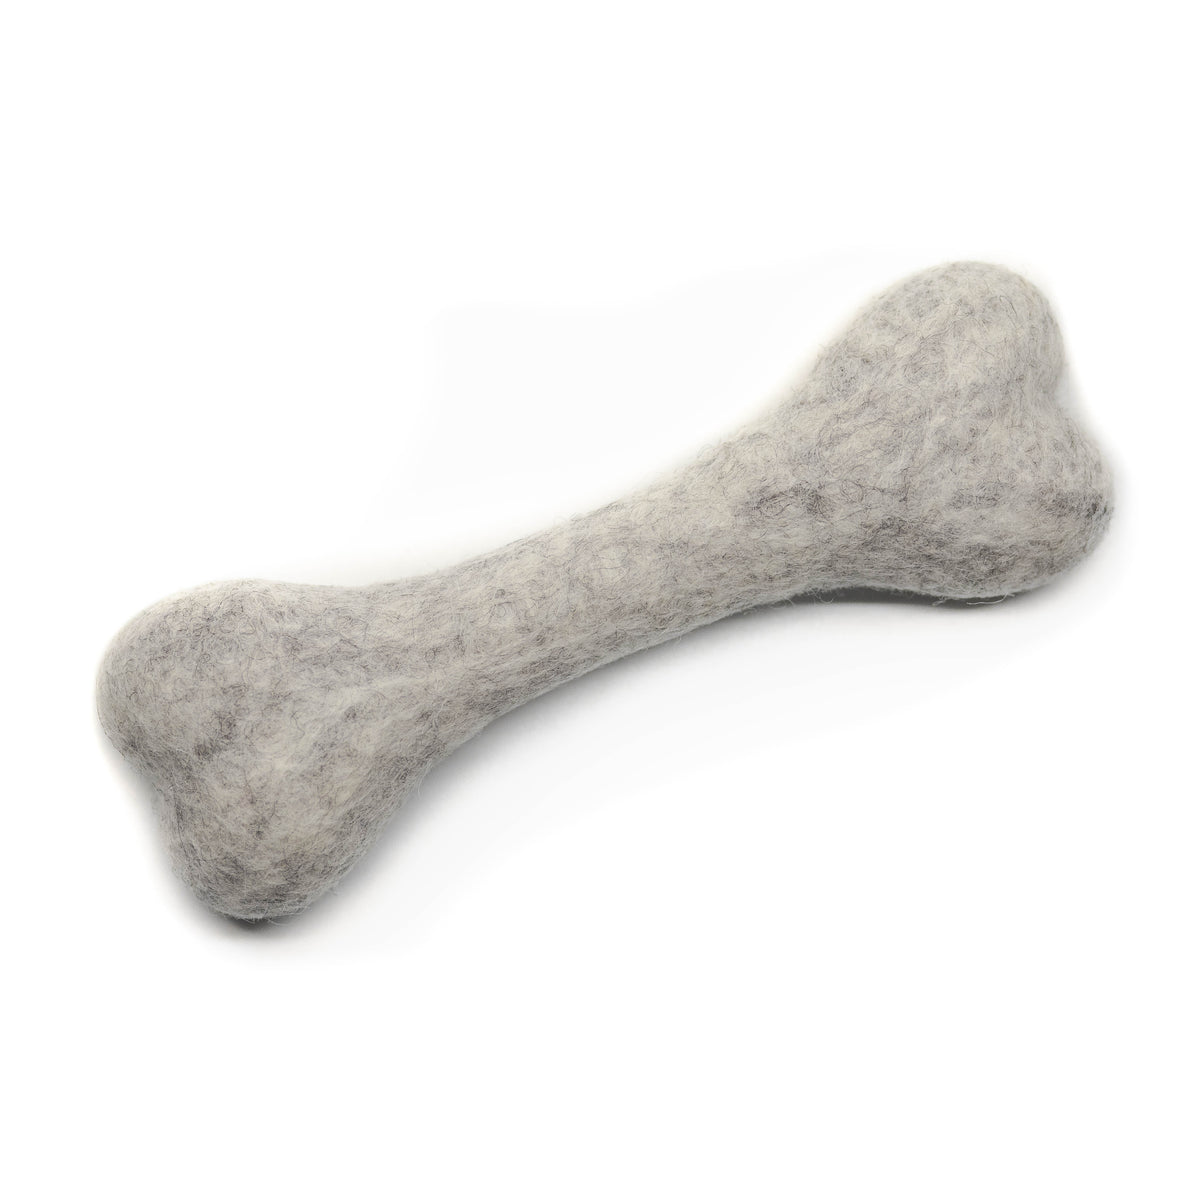 Wool Dog Bone Toy - Heather White